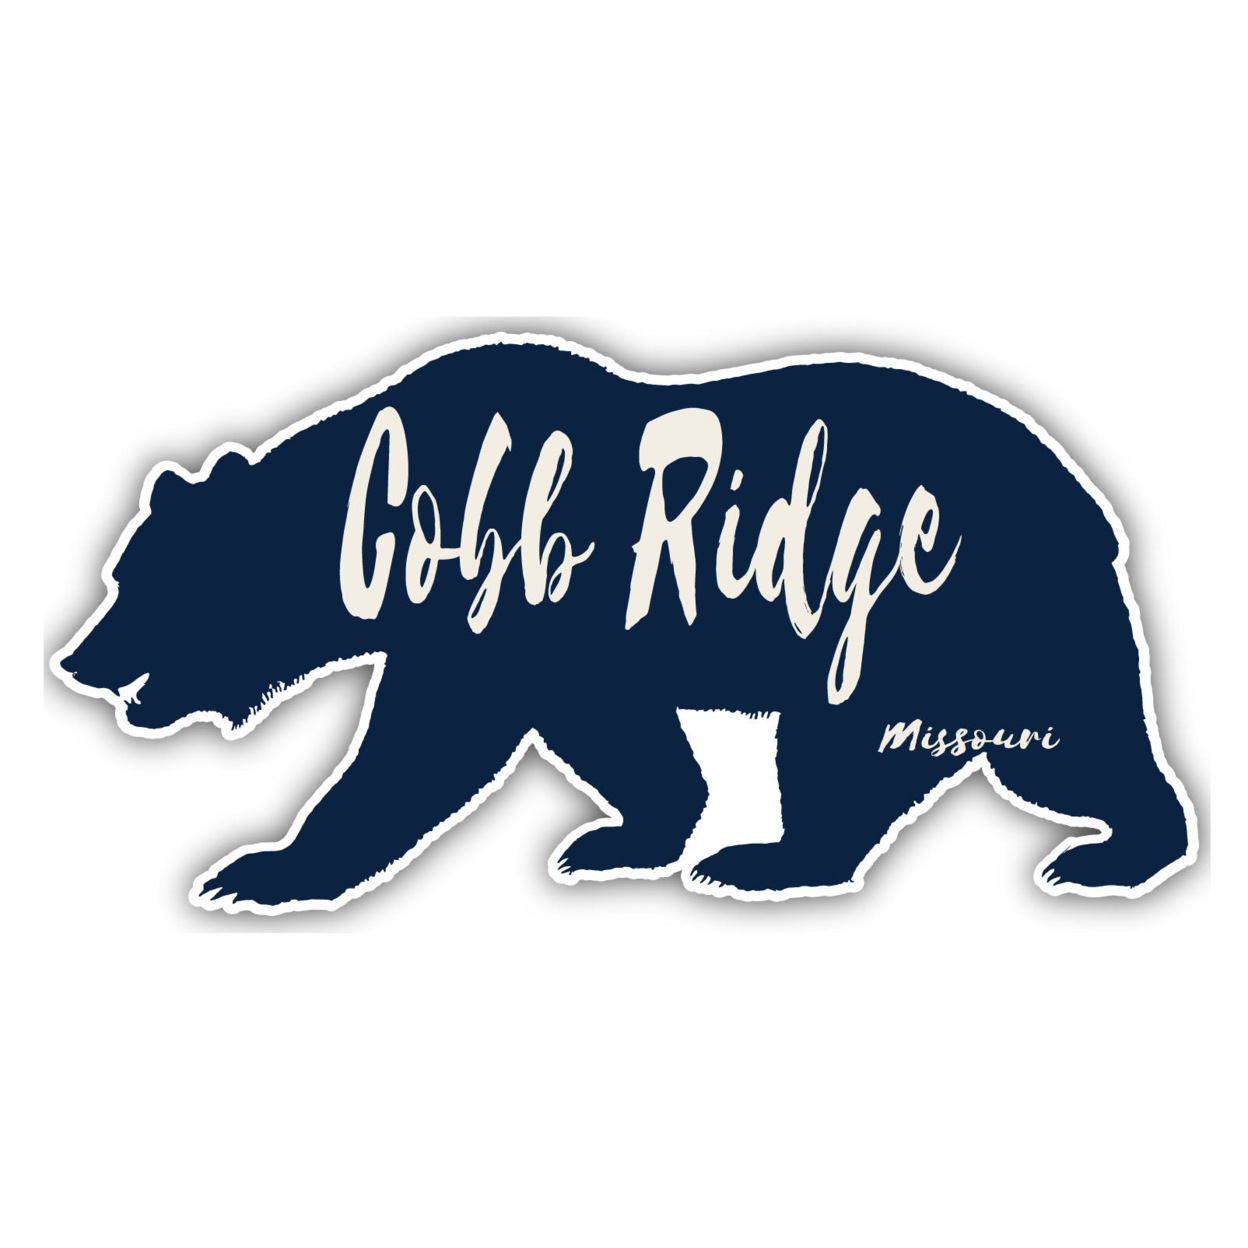 Cobb Ridge Missouri Souvenir Decorative Stickers (Choose Theme And Size) - Single Unit, 2-Inch, Bear